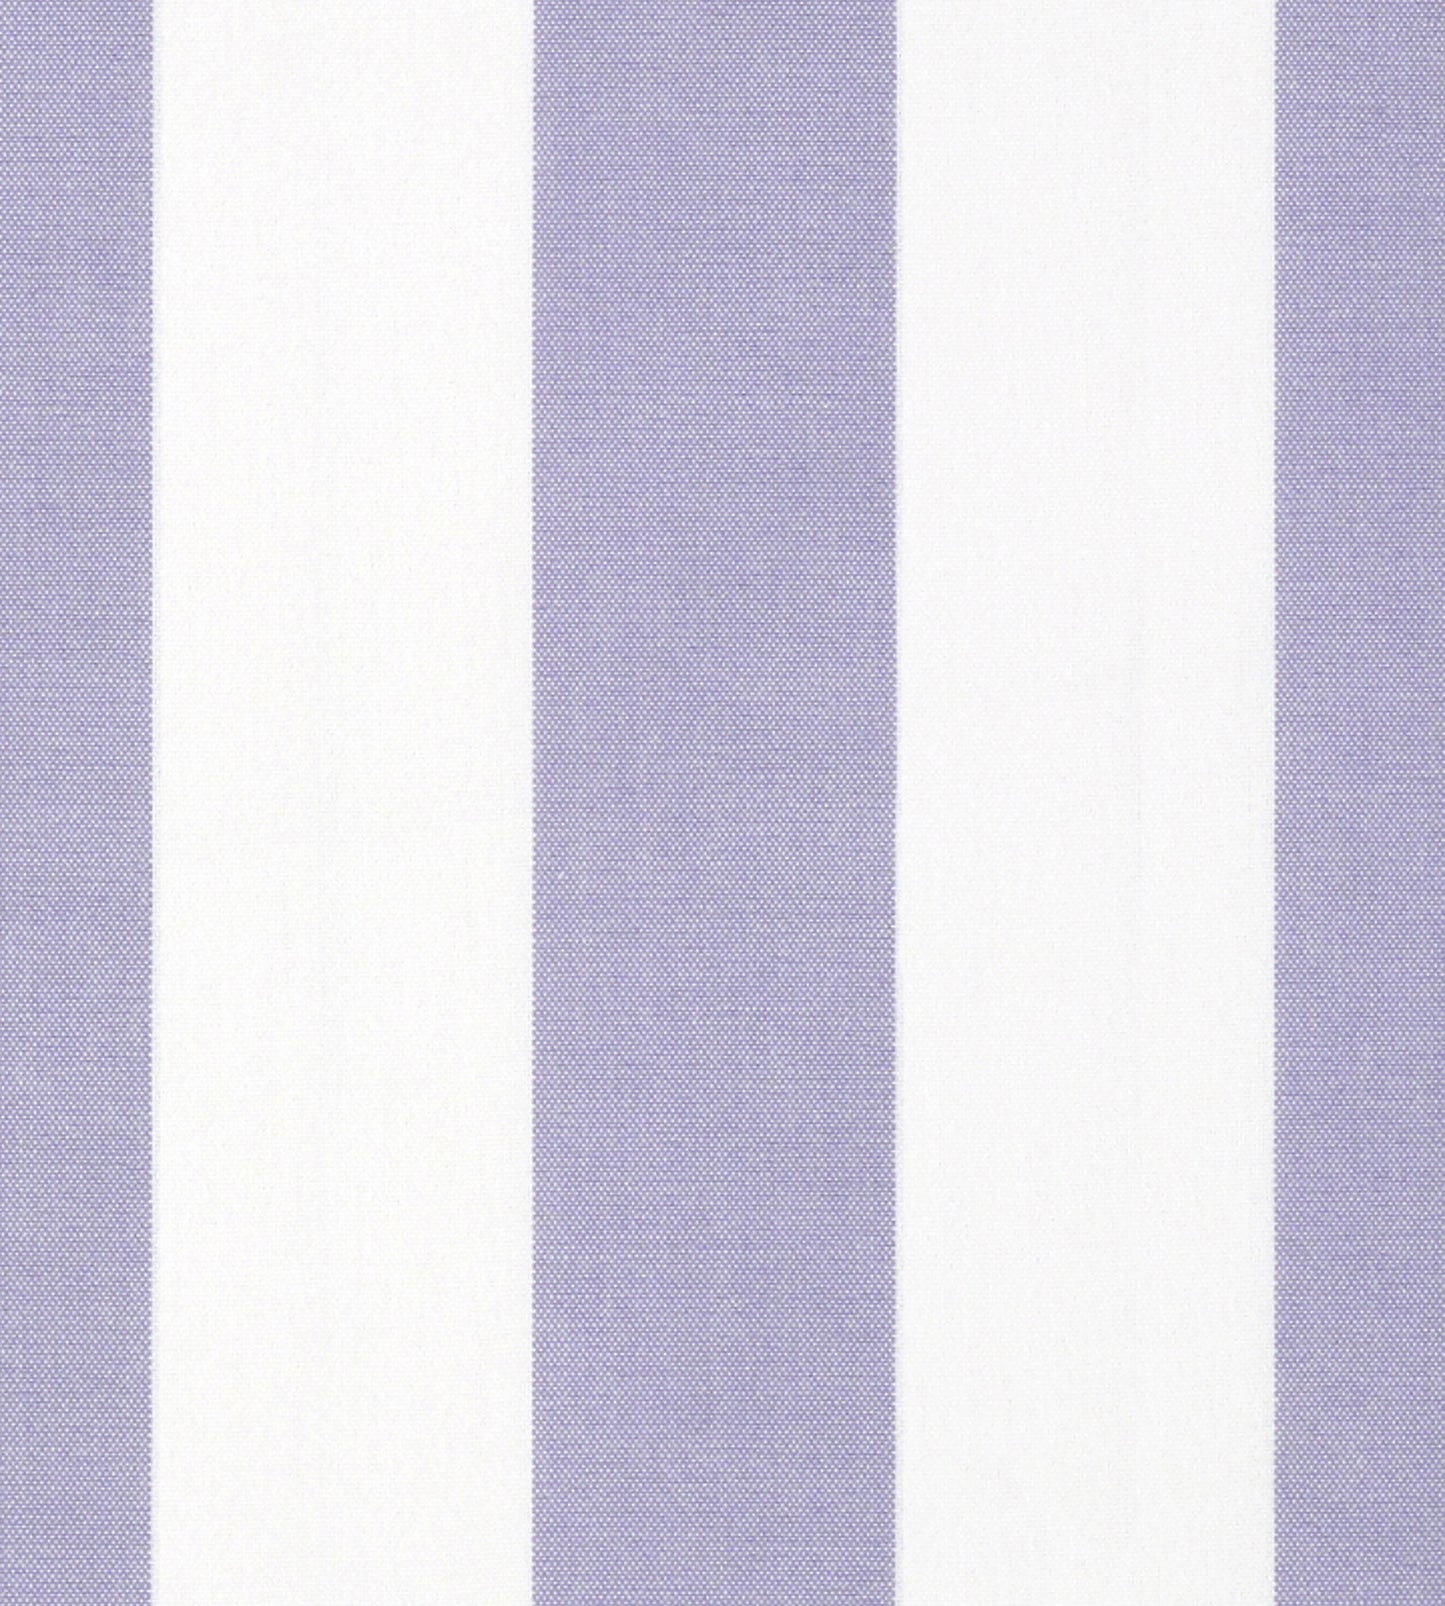 Purchase Old World Weavers Fabric Item F3 00083019, Poker Stripe Lavender 1